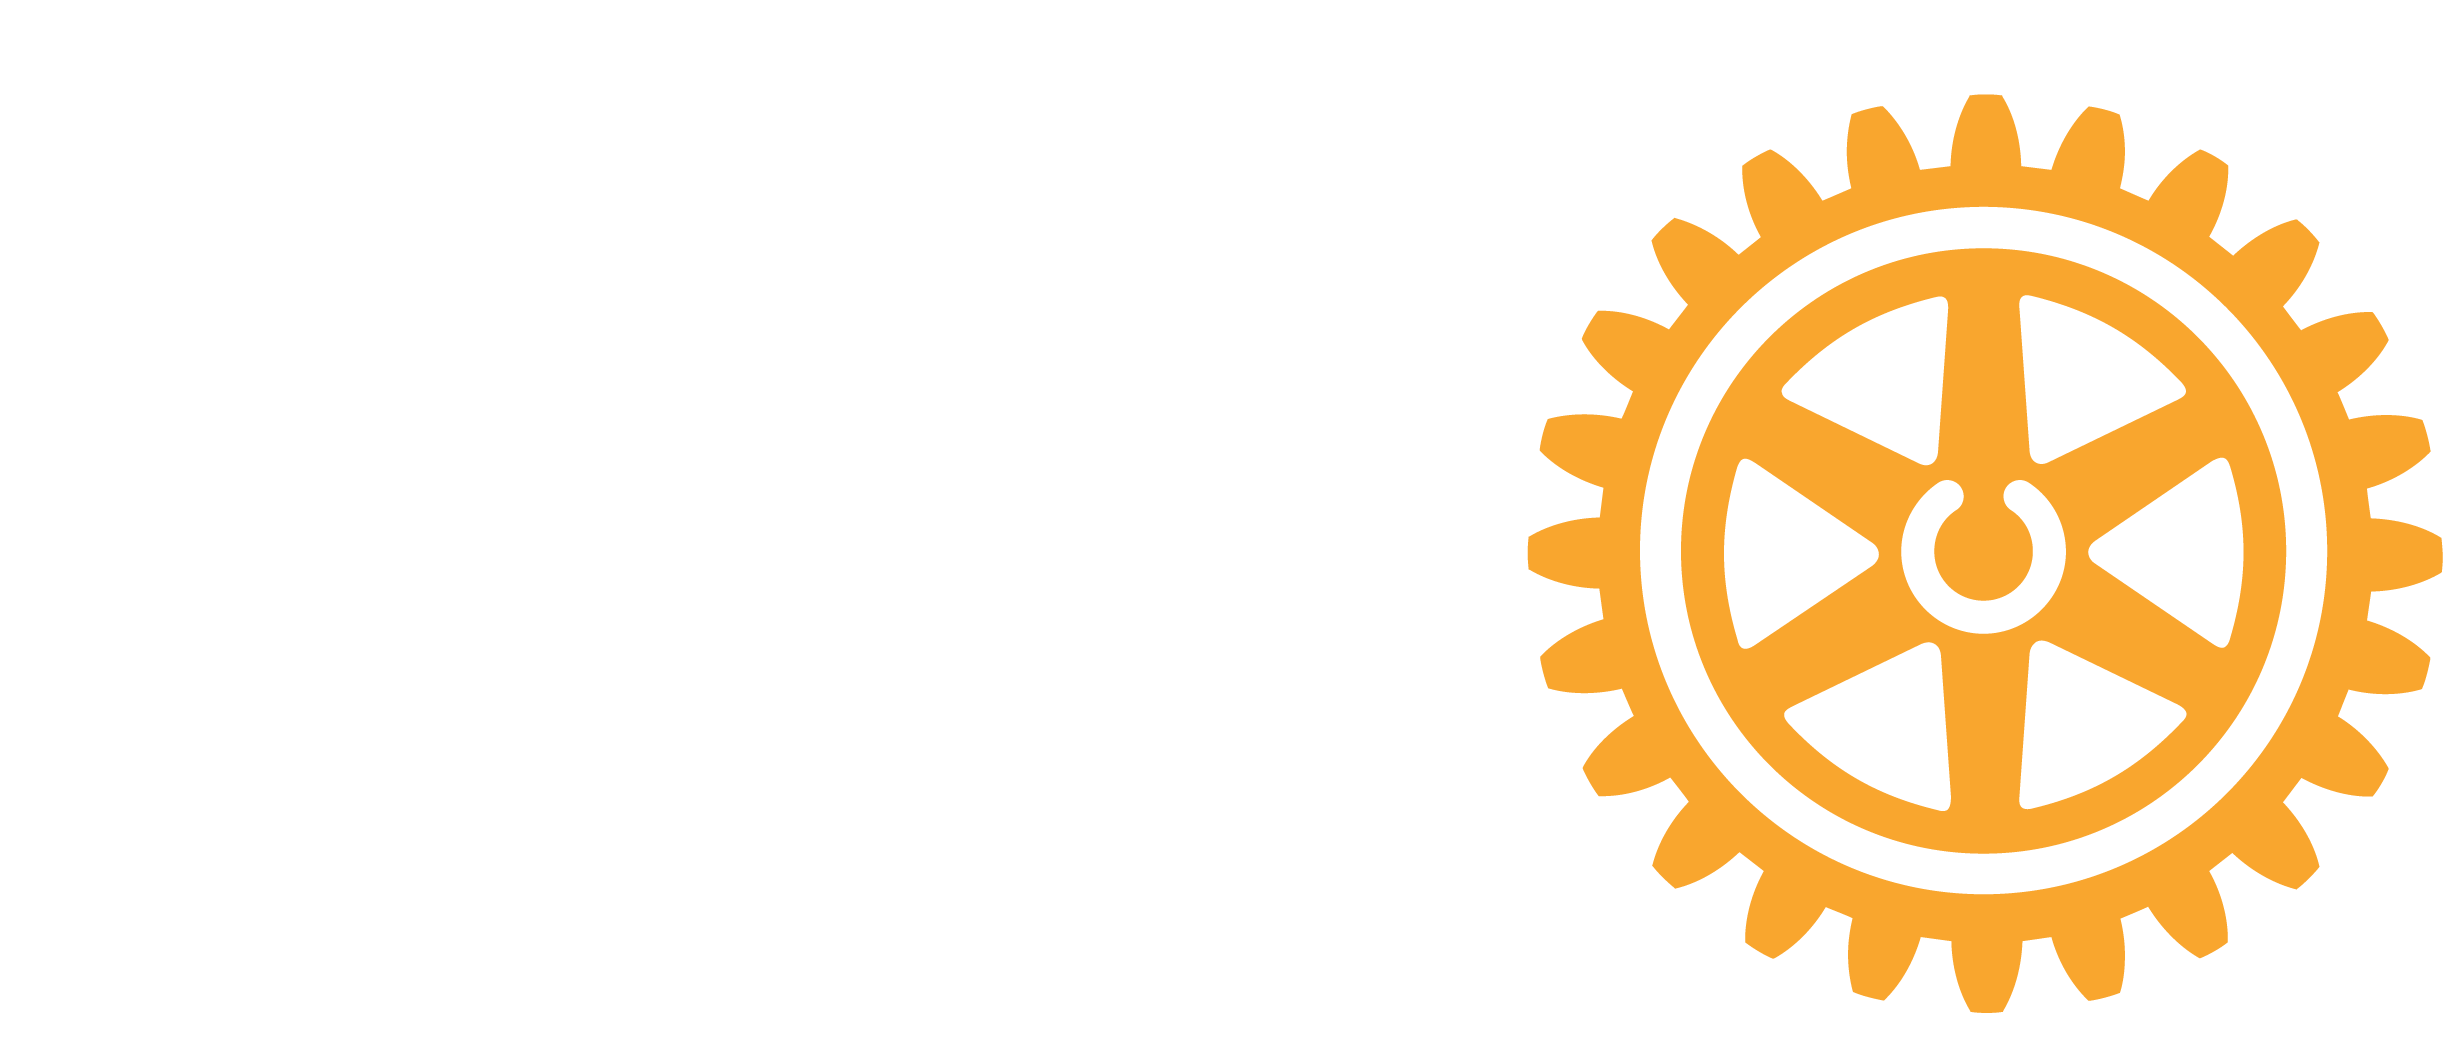 Lynnwood_Rotary_Wht